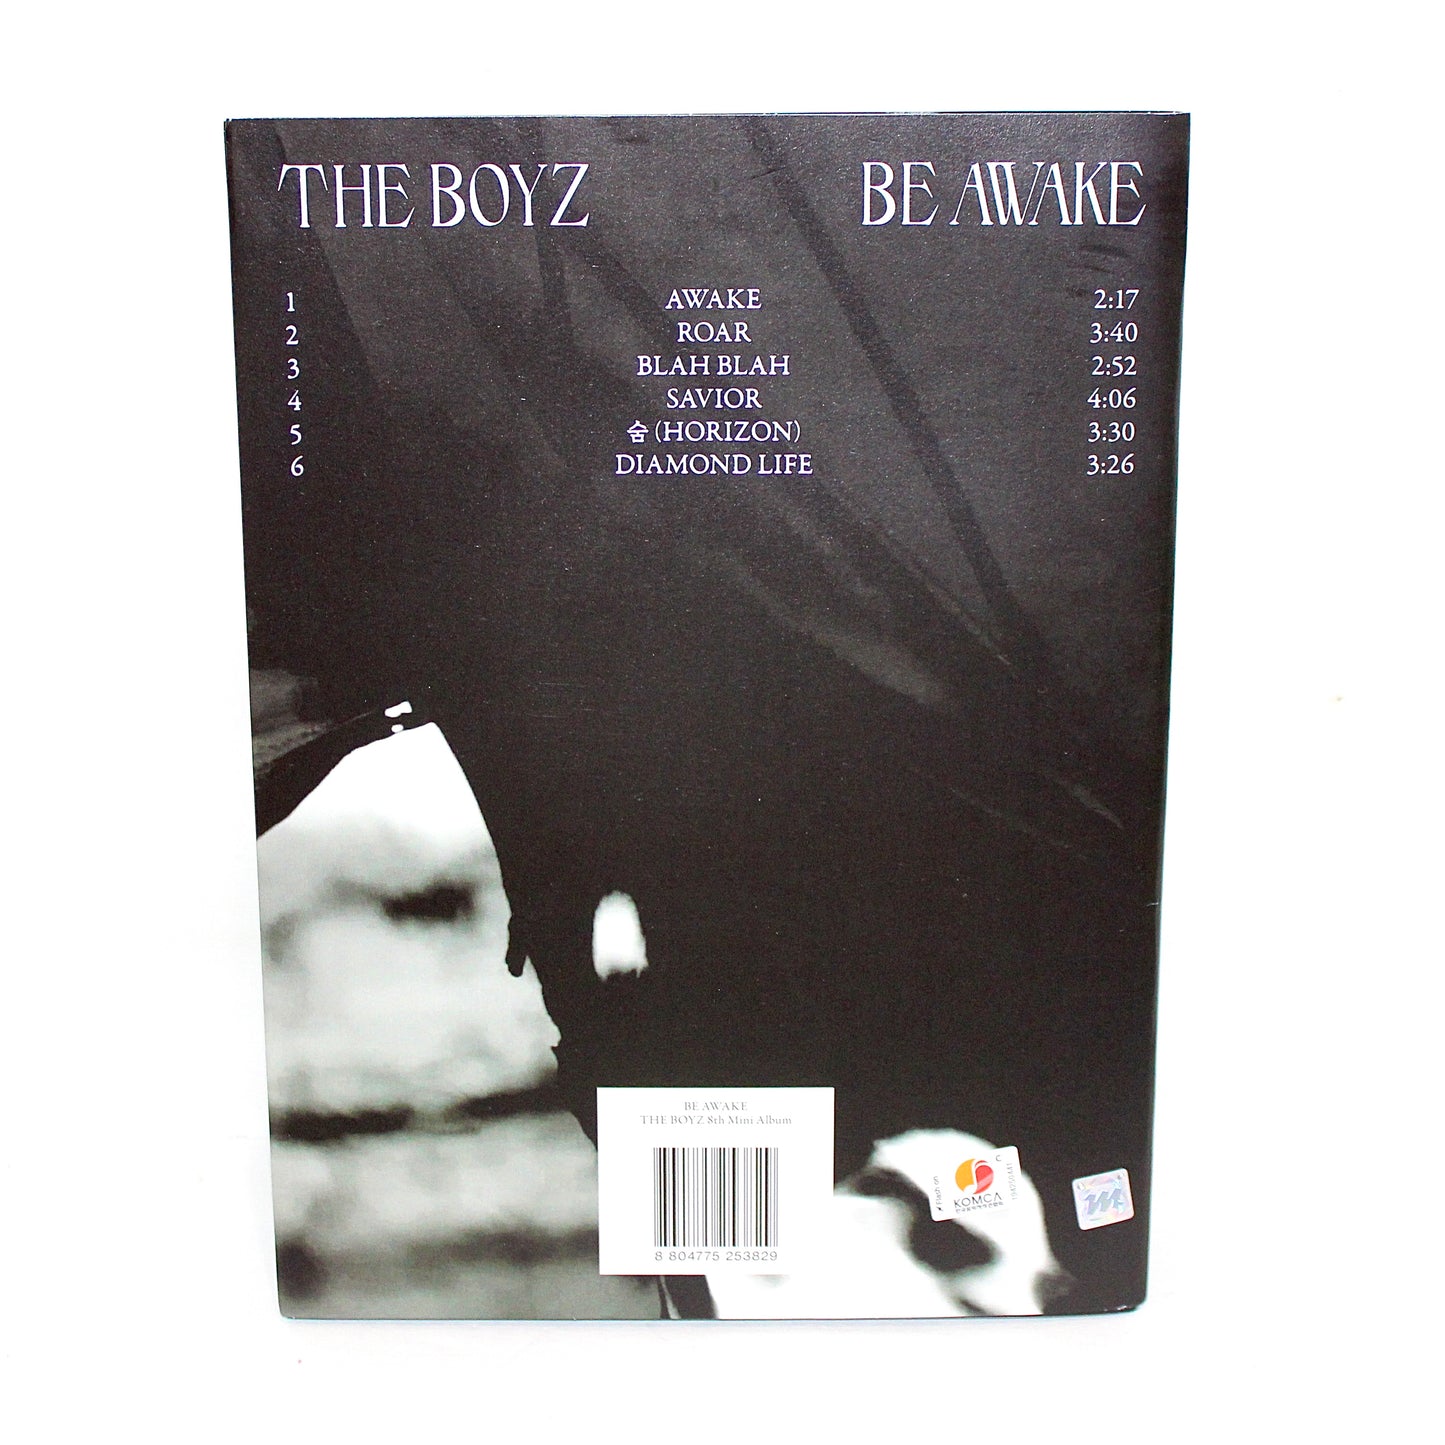 THE BOYZ 8th Mini Album - Be Awake: Roar | Reach Ver.